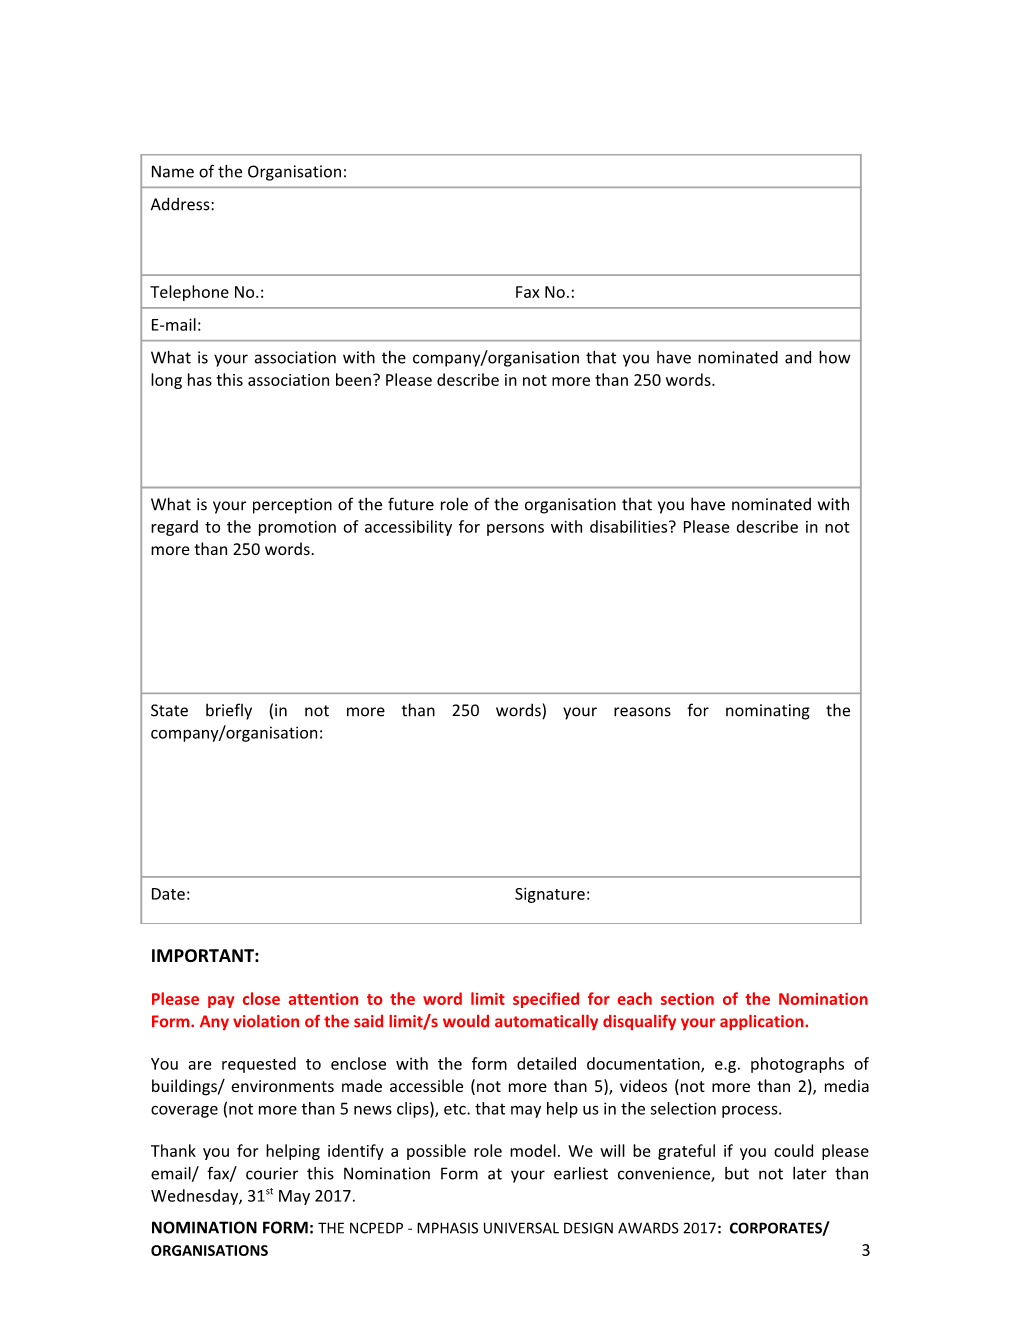 UDA Nomination-Form: Category C